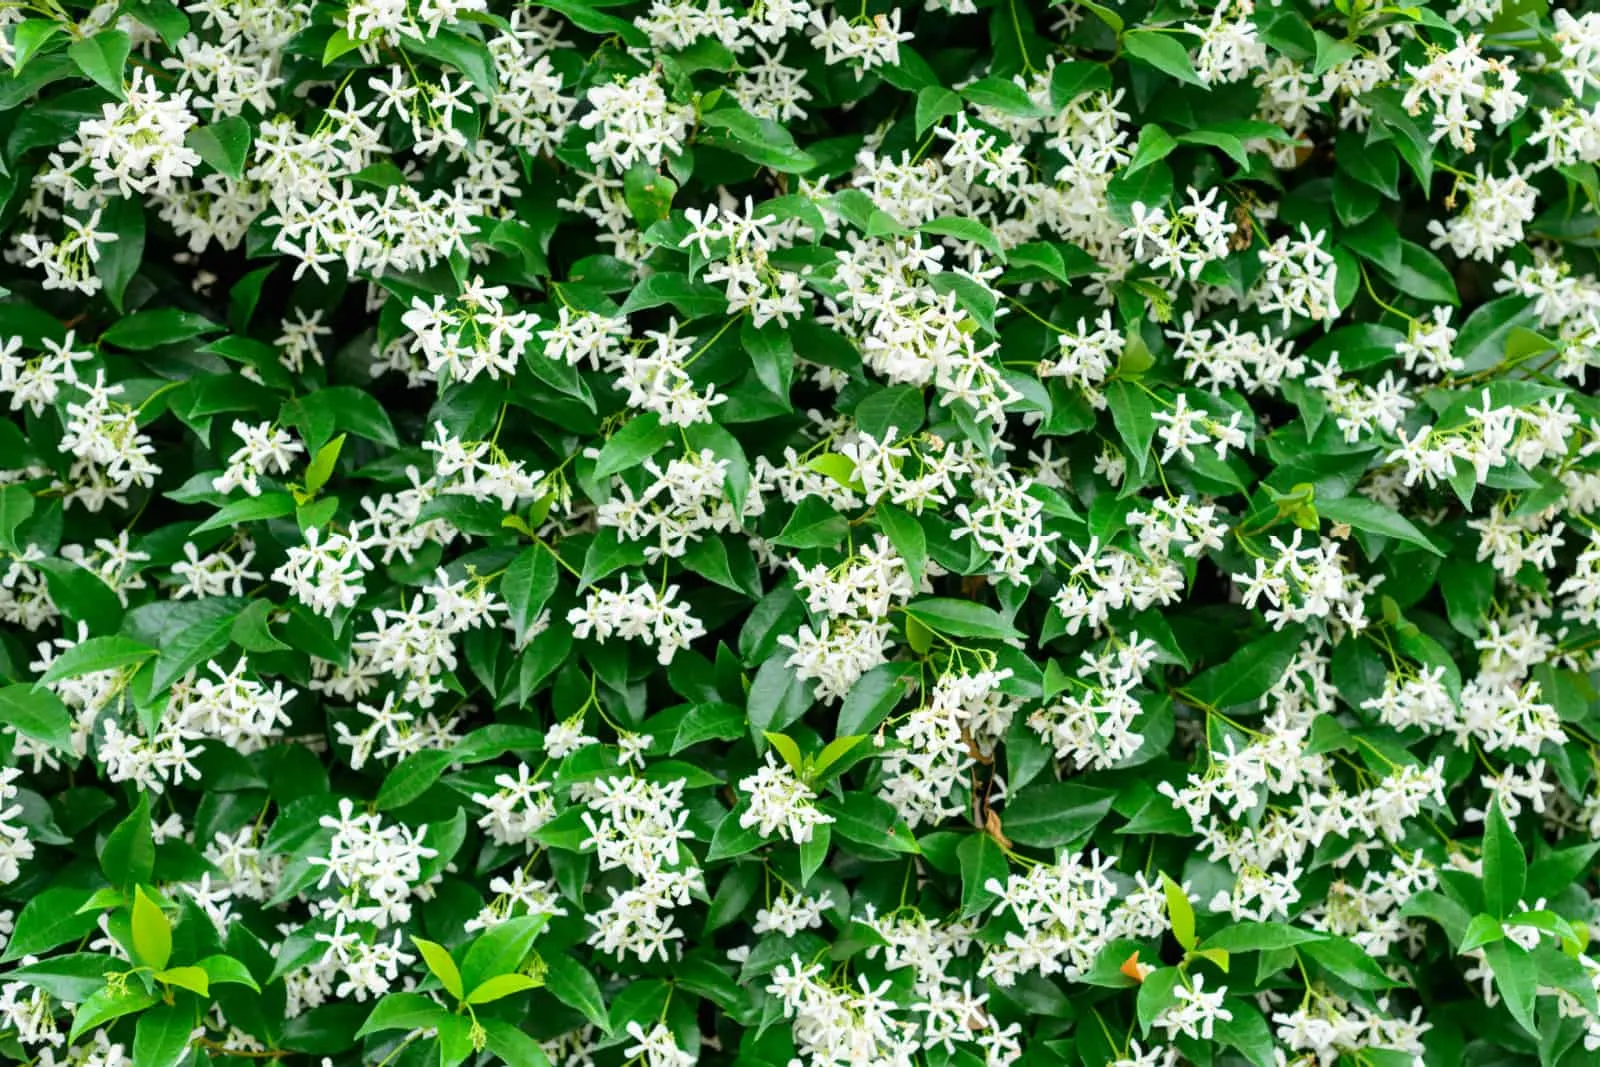 Wall of Chinese star jasmine flowers